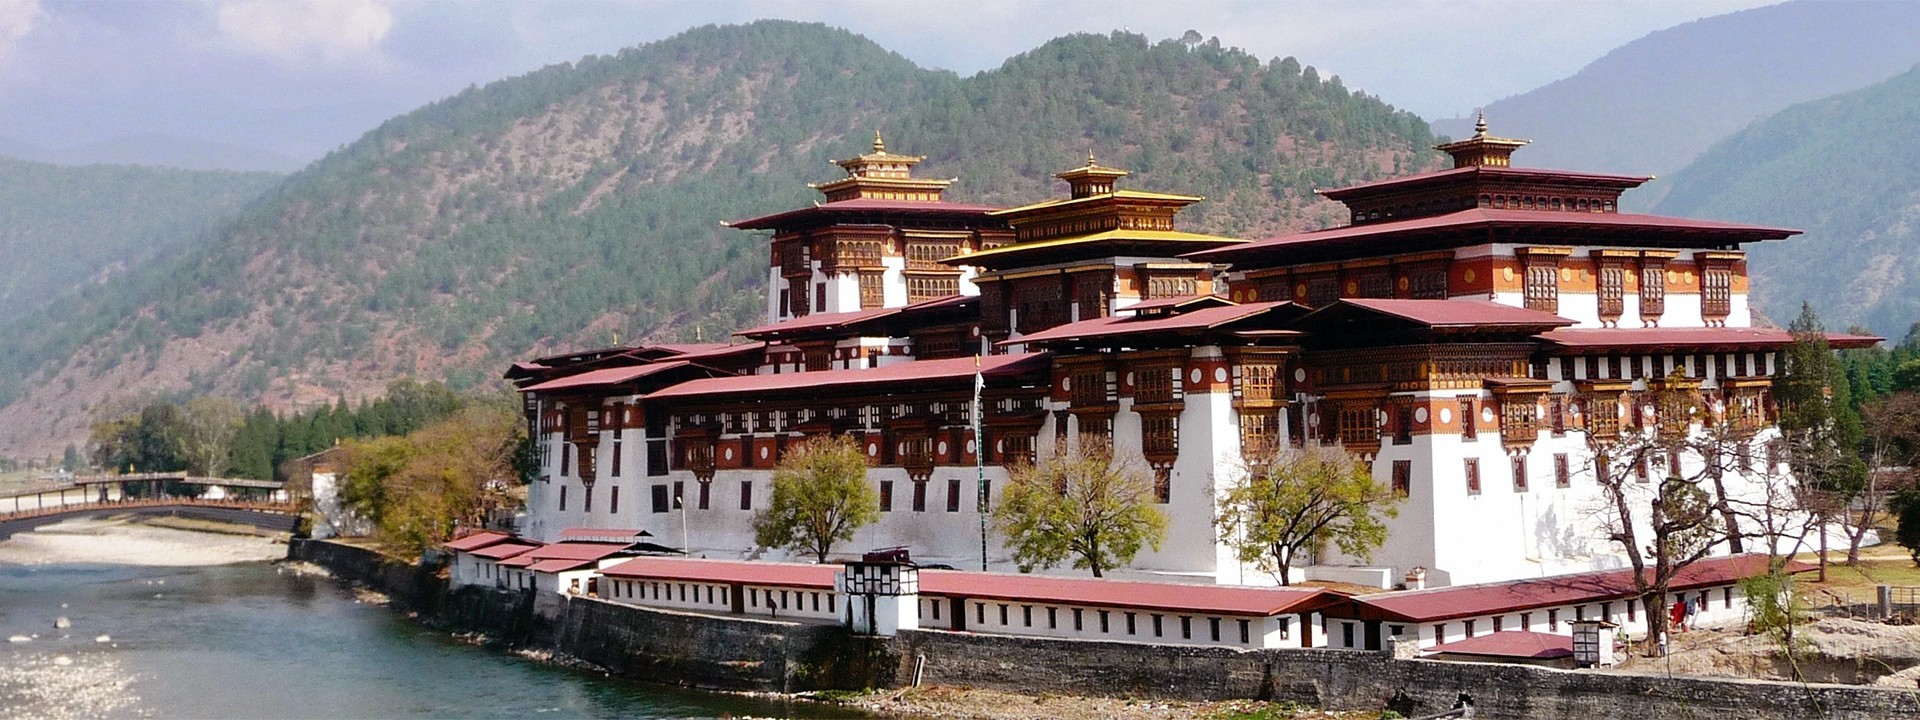 The Last Shangrila | The Magical Kingdom of Bhutan